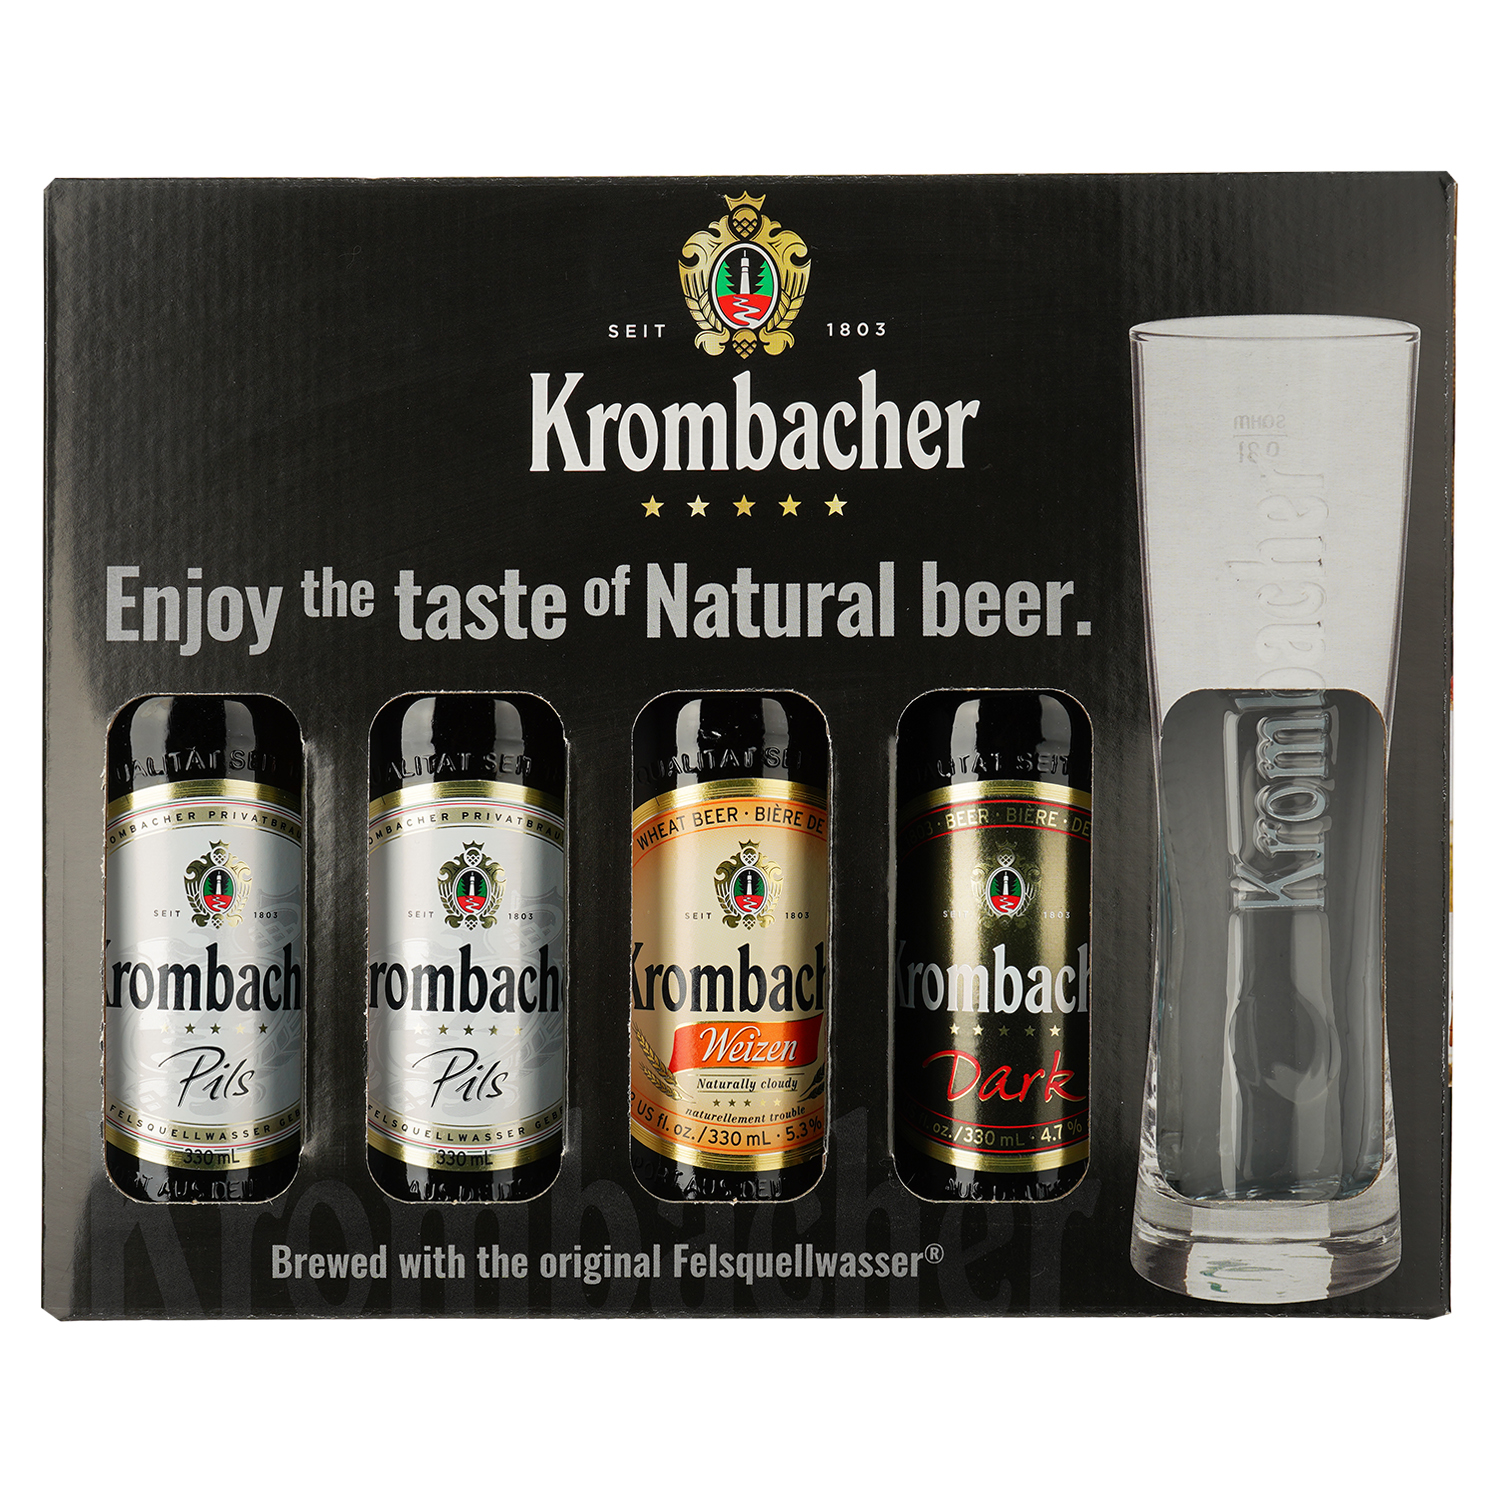 Набор пива Krombacher (Pils 2 шт. х 0.33 л, Weizen 1 шт. х 0.33 л, Dark 1 шт. х 0.33 л) + бокал - фото 1